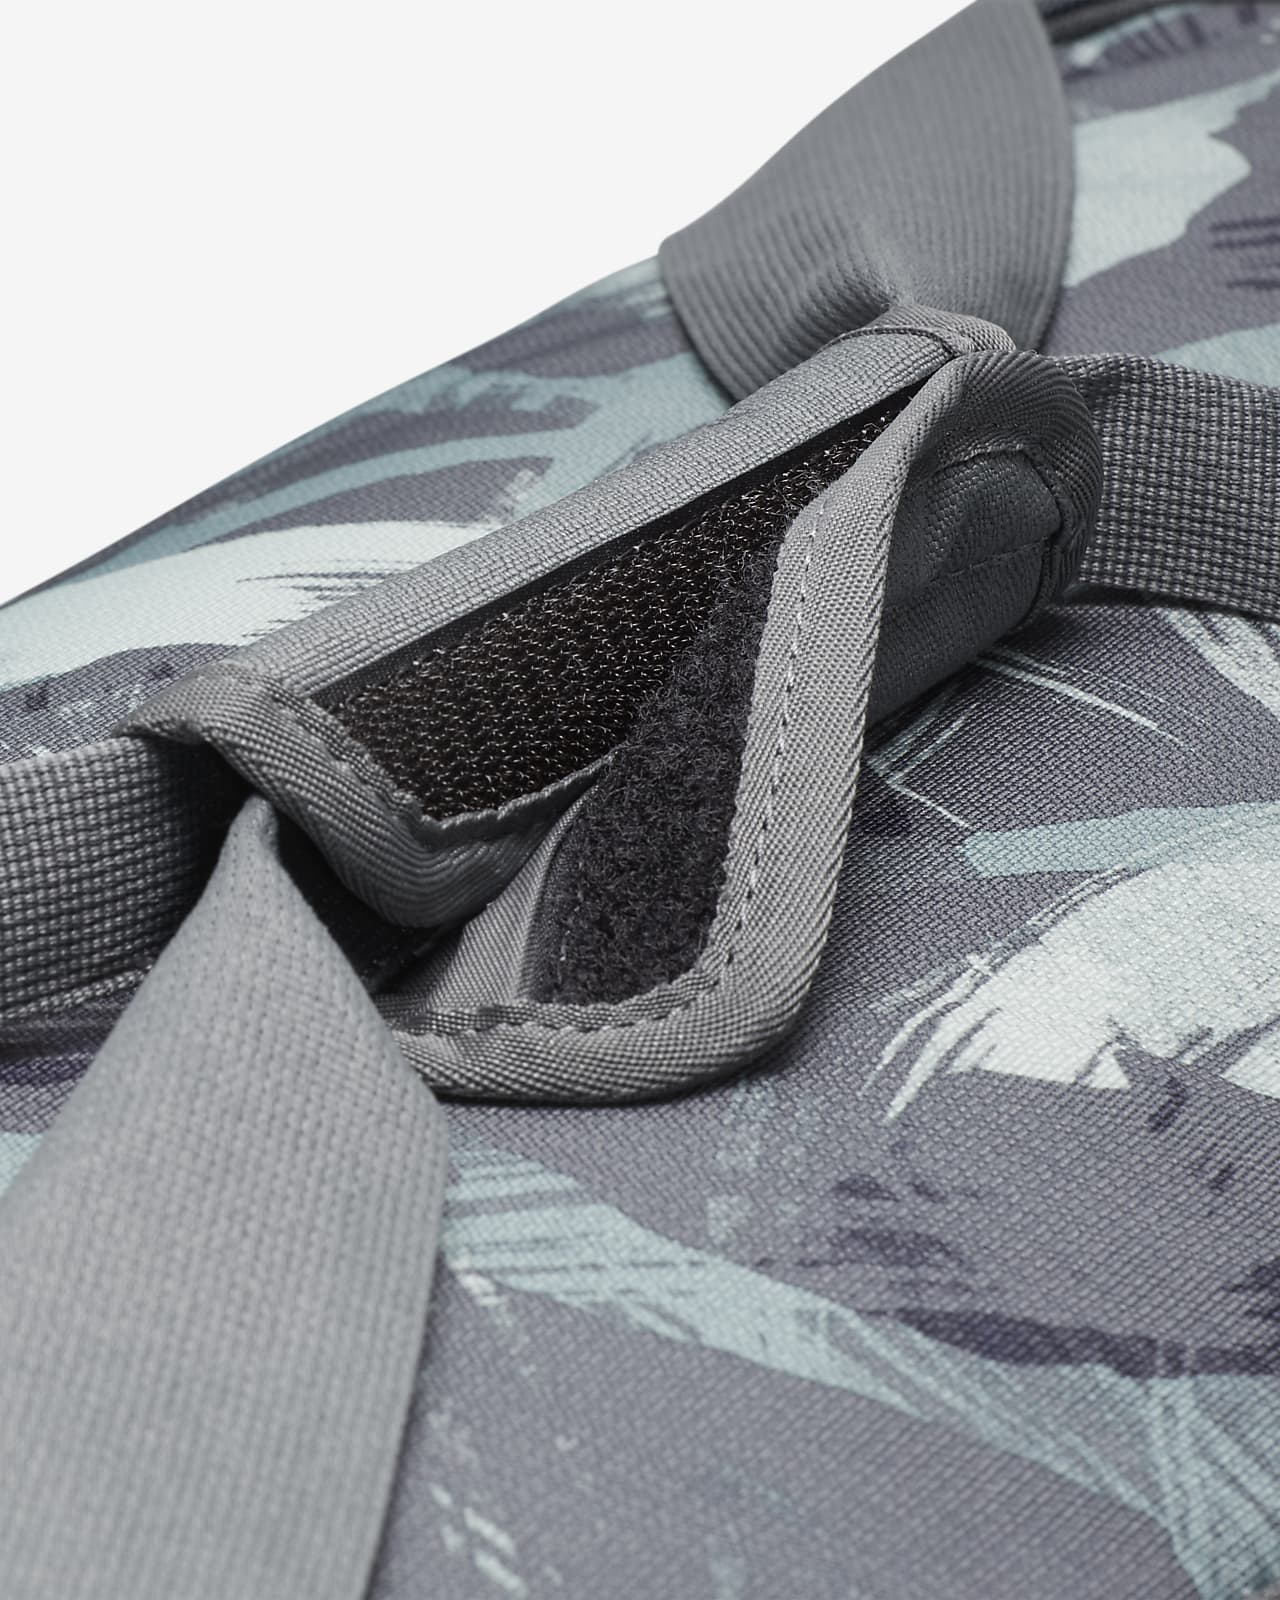 Nike Brasilia Medium Duffel Bag Print